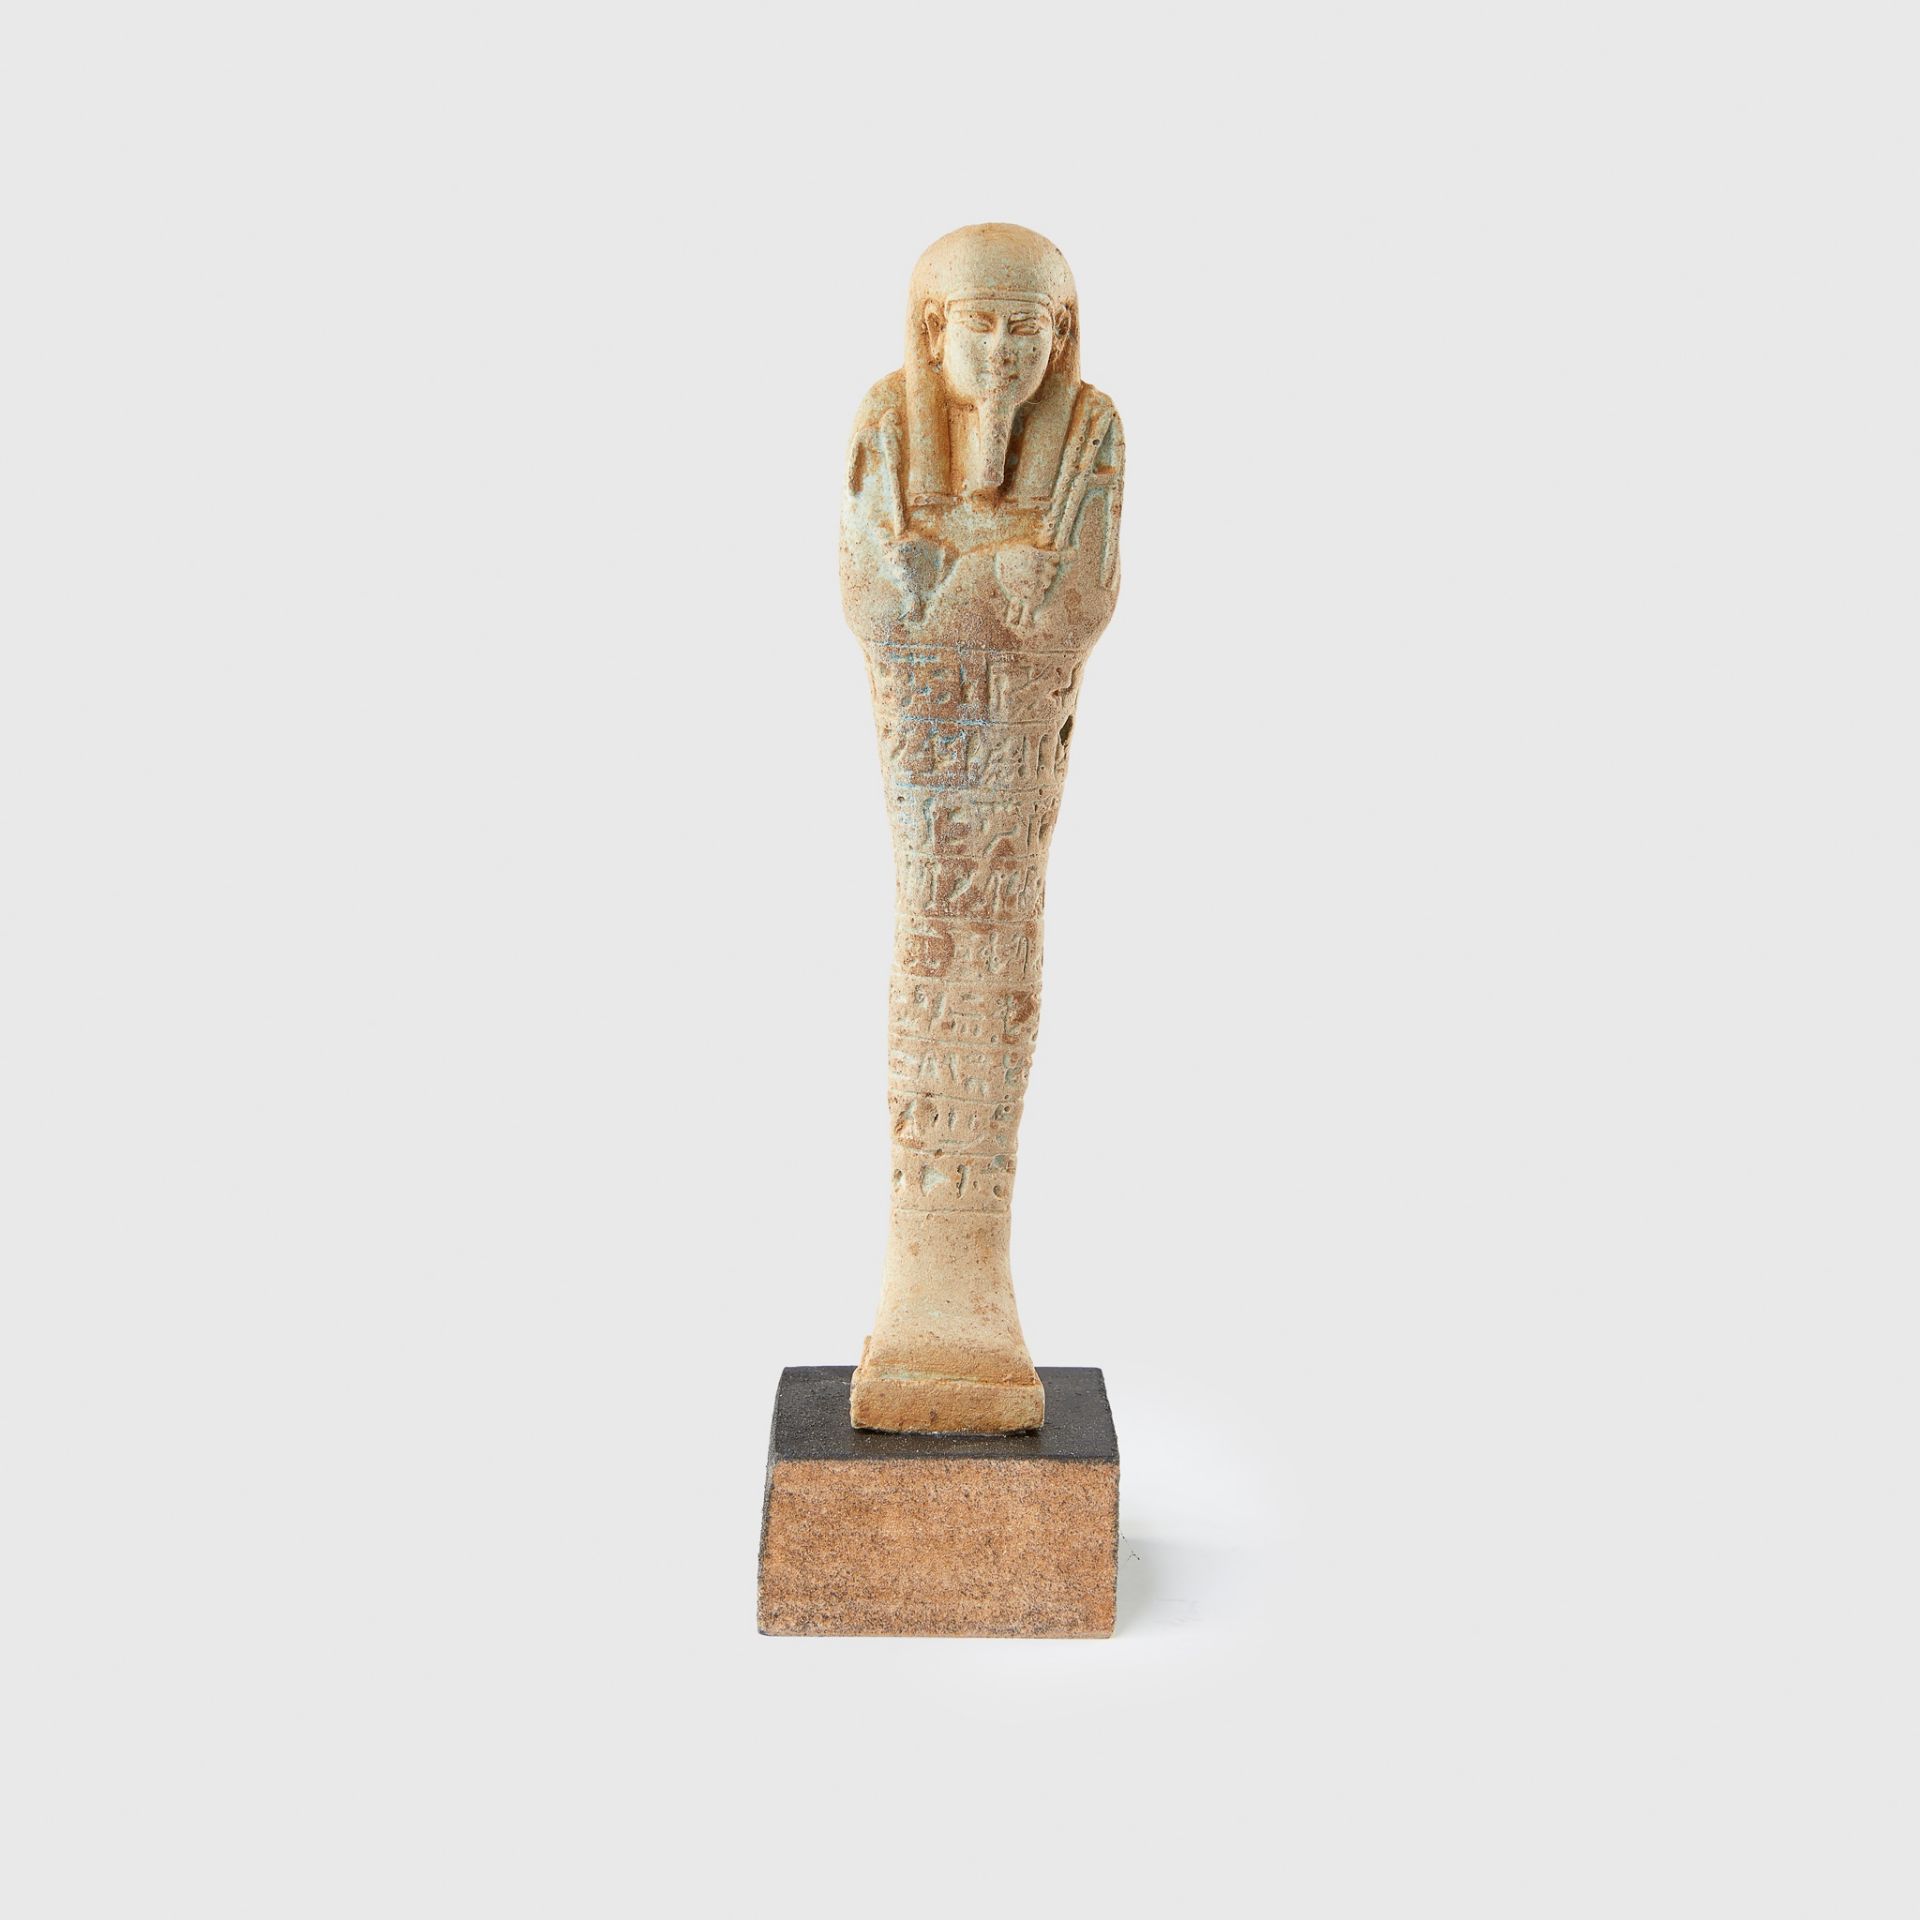 SHABTI EGYPT, LATE PERIOD c. 664 - 332 B.C.